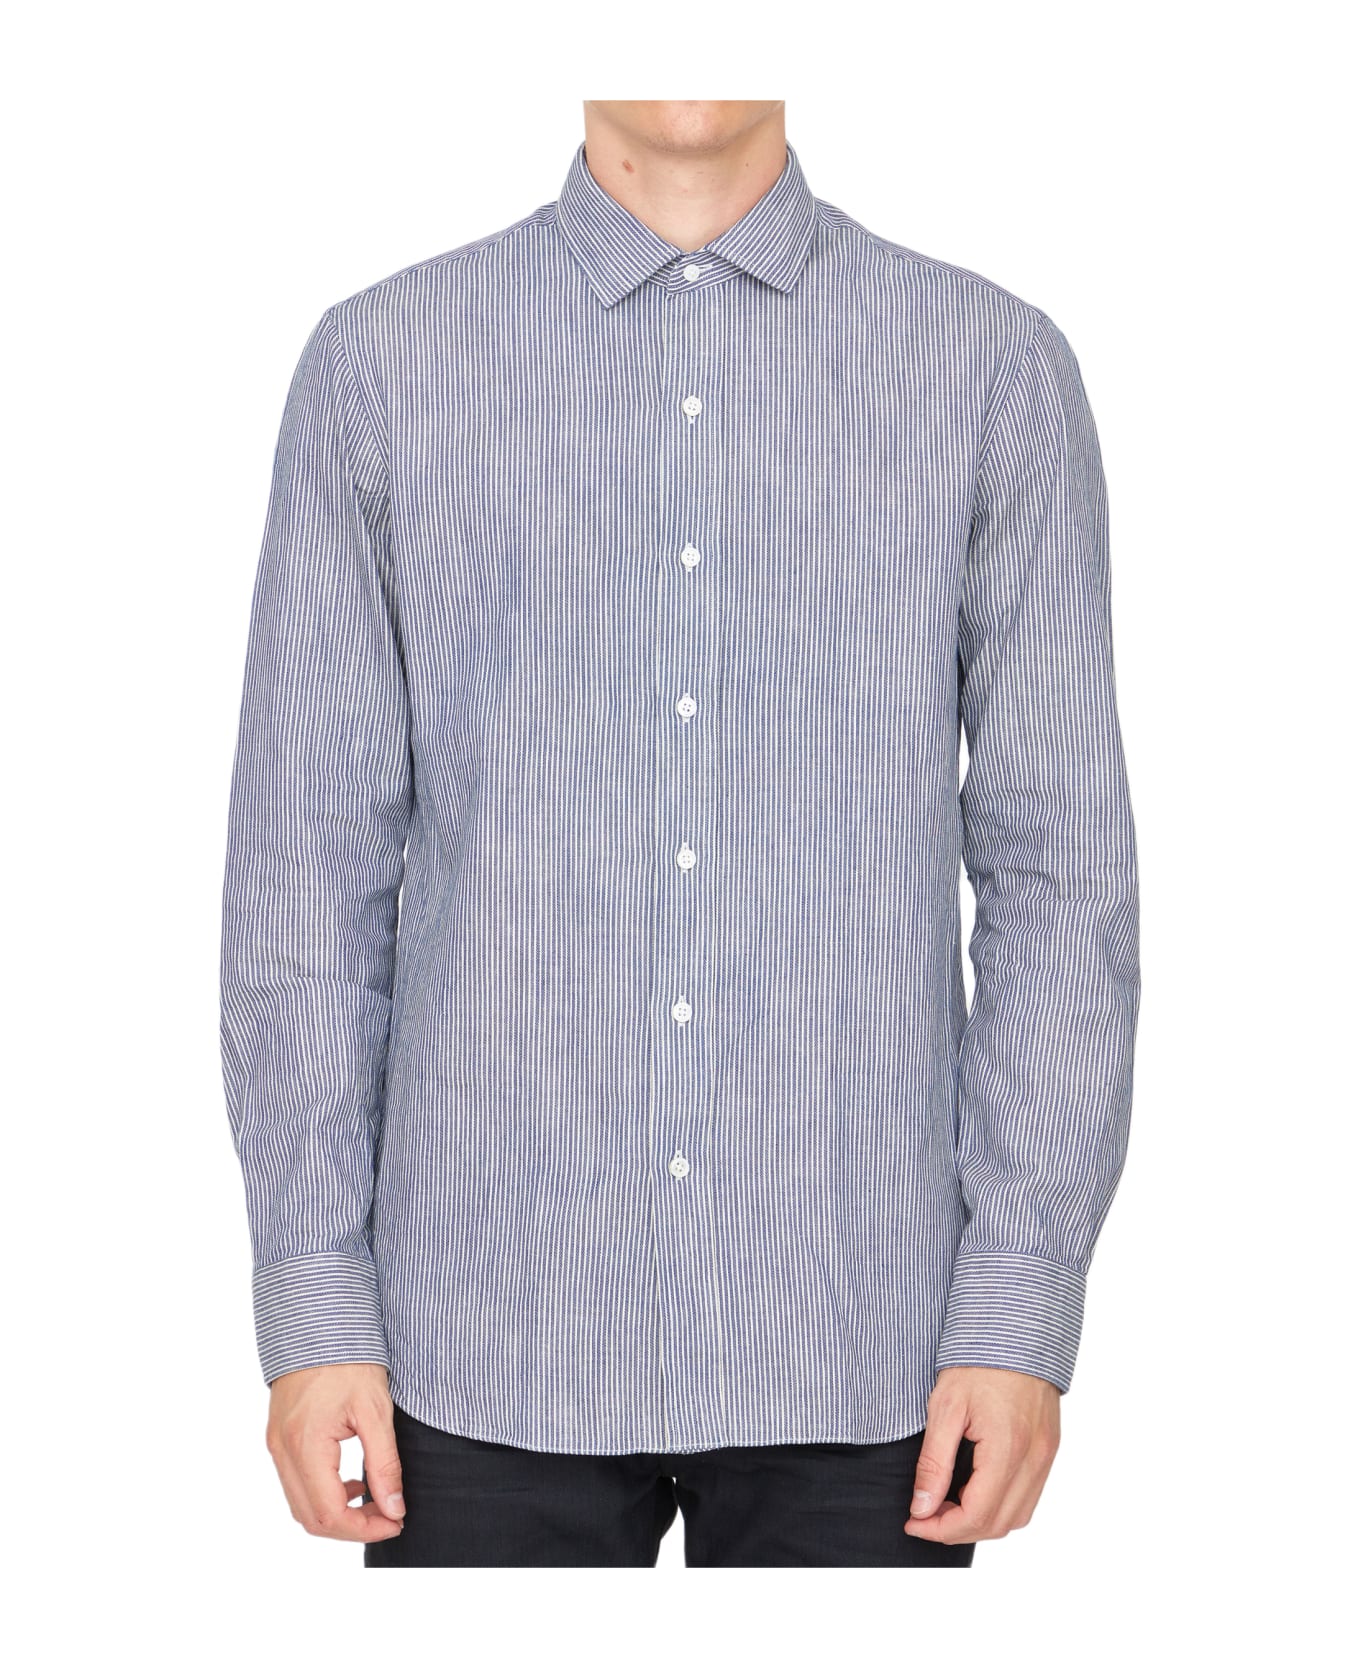 Salvatore Piccolo Striped Cotton Shirt - LIGHT BLUE